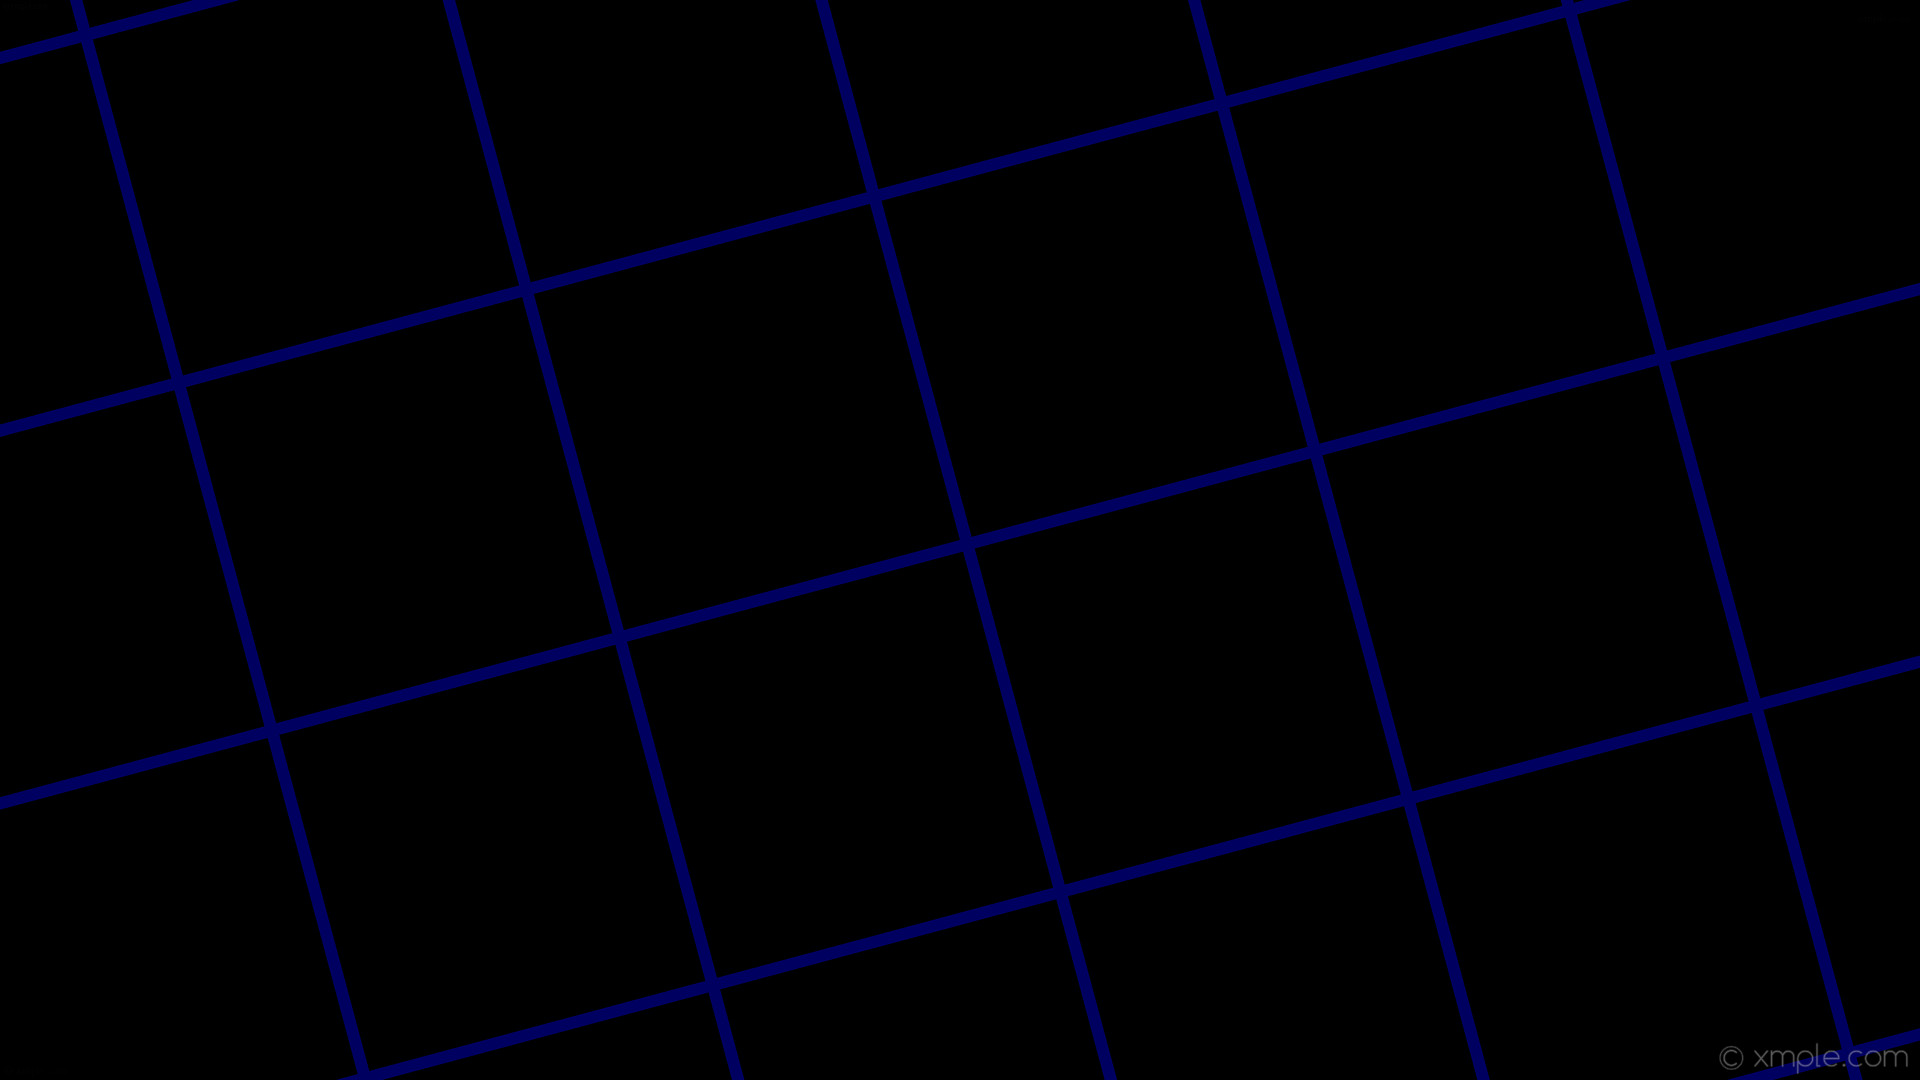 1920x1080 wallpaper graph paper blue black grid dark blue #000000 #00008b 15Â° 12px  360px